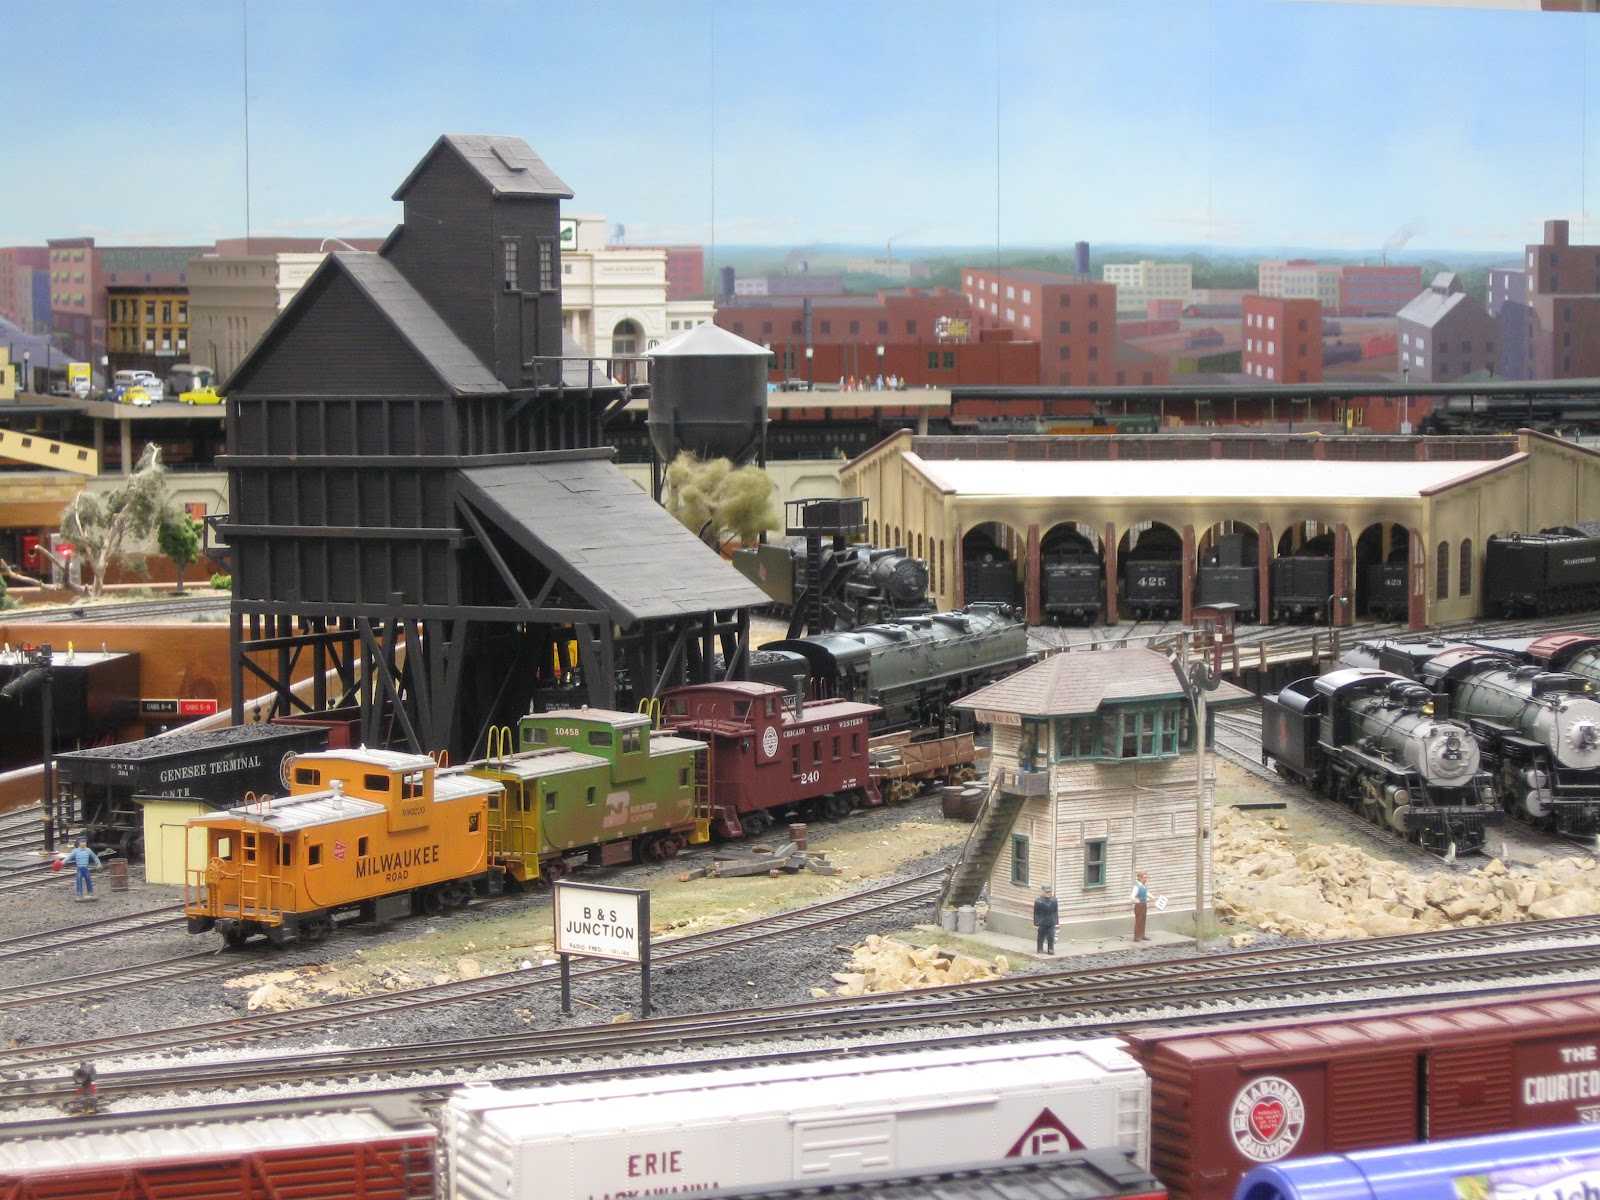 Twin City Model Railroad Museum in St. Paul, MN facing 